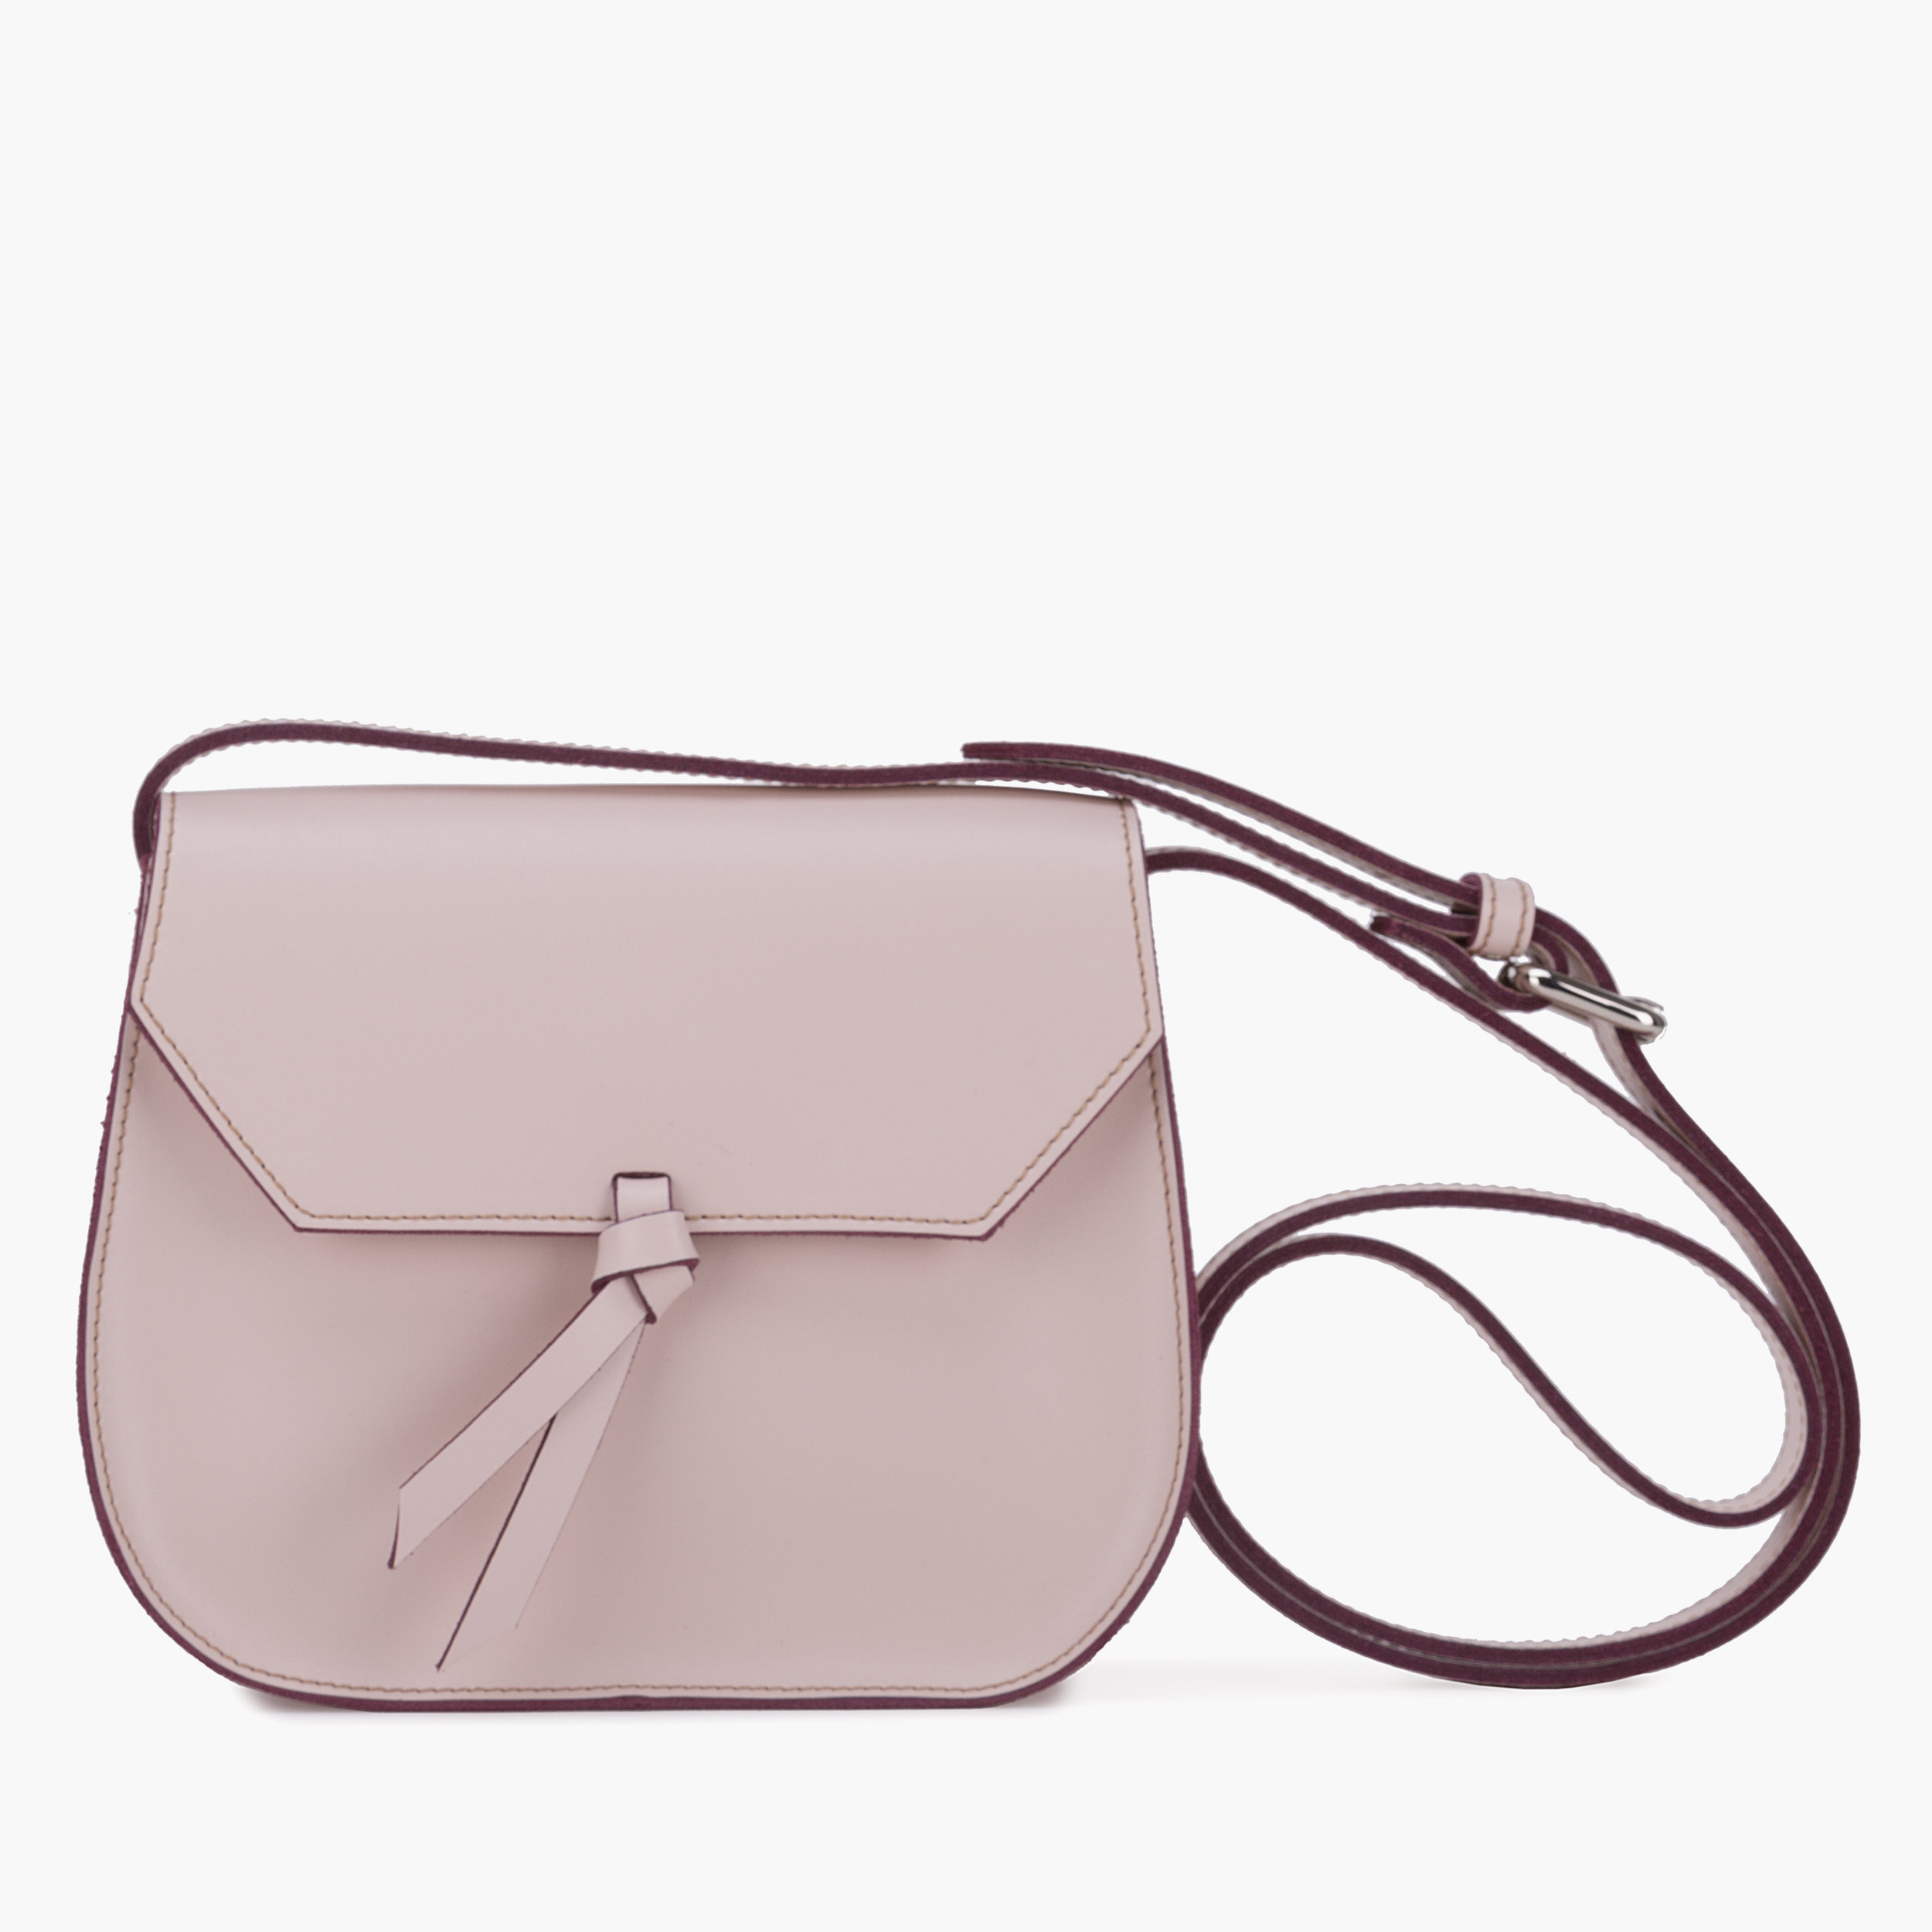 Bright Pink Leather Bag 90s Style Handbag Mother's Day Gift Small Women Handbag Vera Pelle Leather Cross-body Bag Bags & Purses Handbags Crossbody Bags 